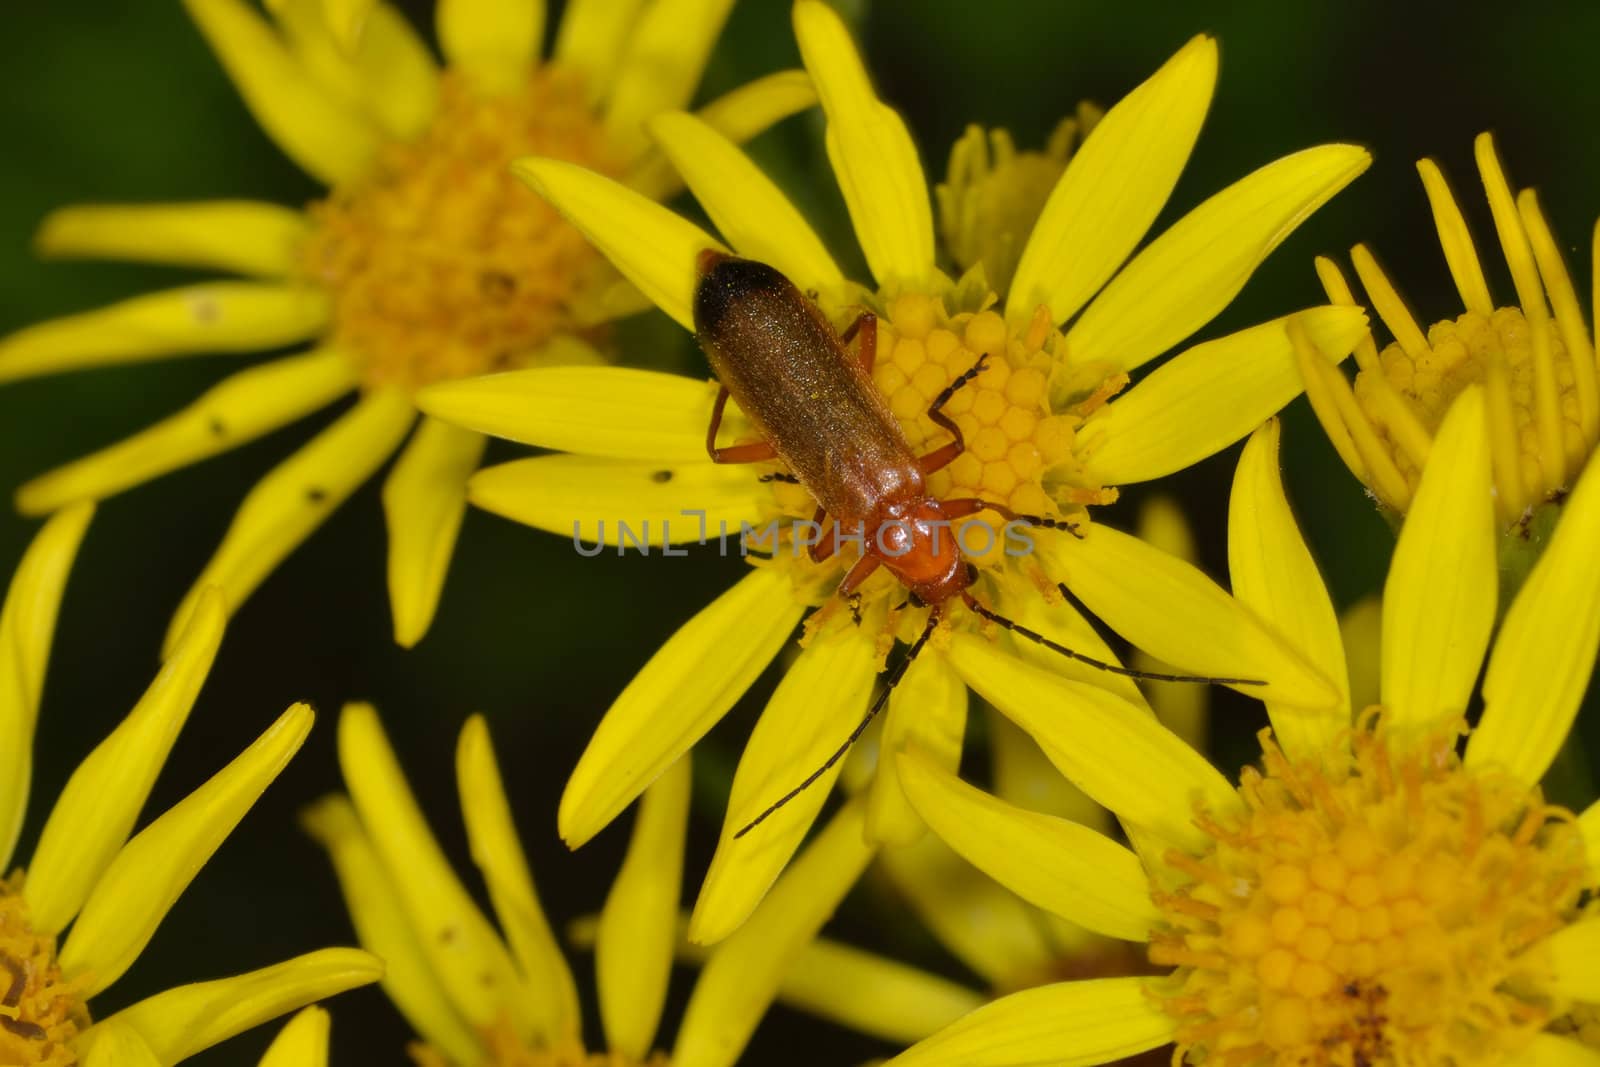 Red Sodier beetle on feeding on ragwort